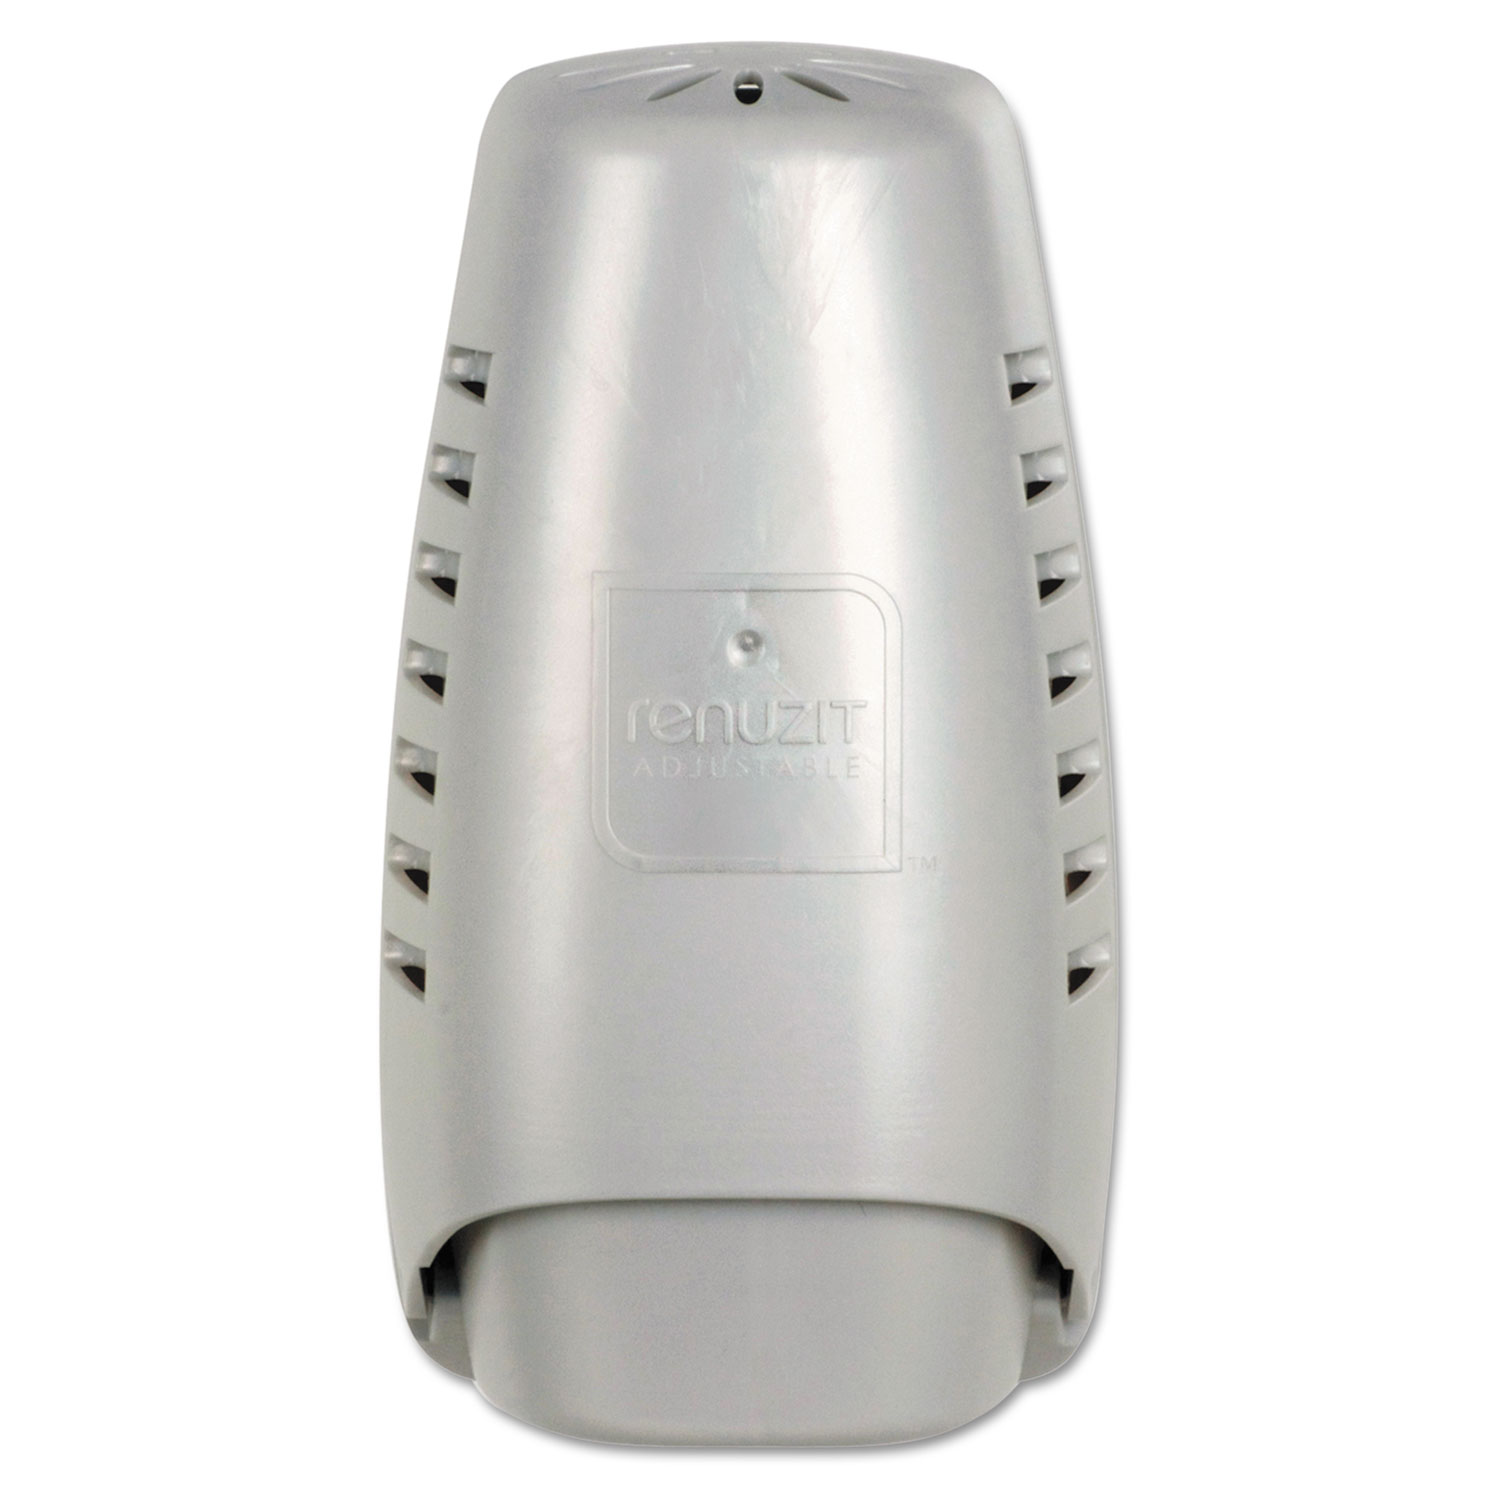  Renuzit 1700004395 Wall Mount Air Freshener Dispenser, 3.75 x 3.25 x 7.25, Silver (DIA04395) 